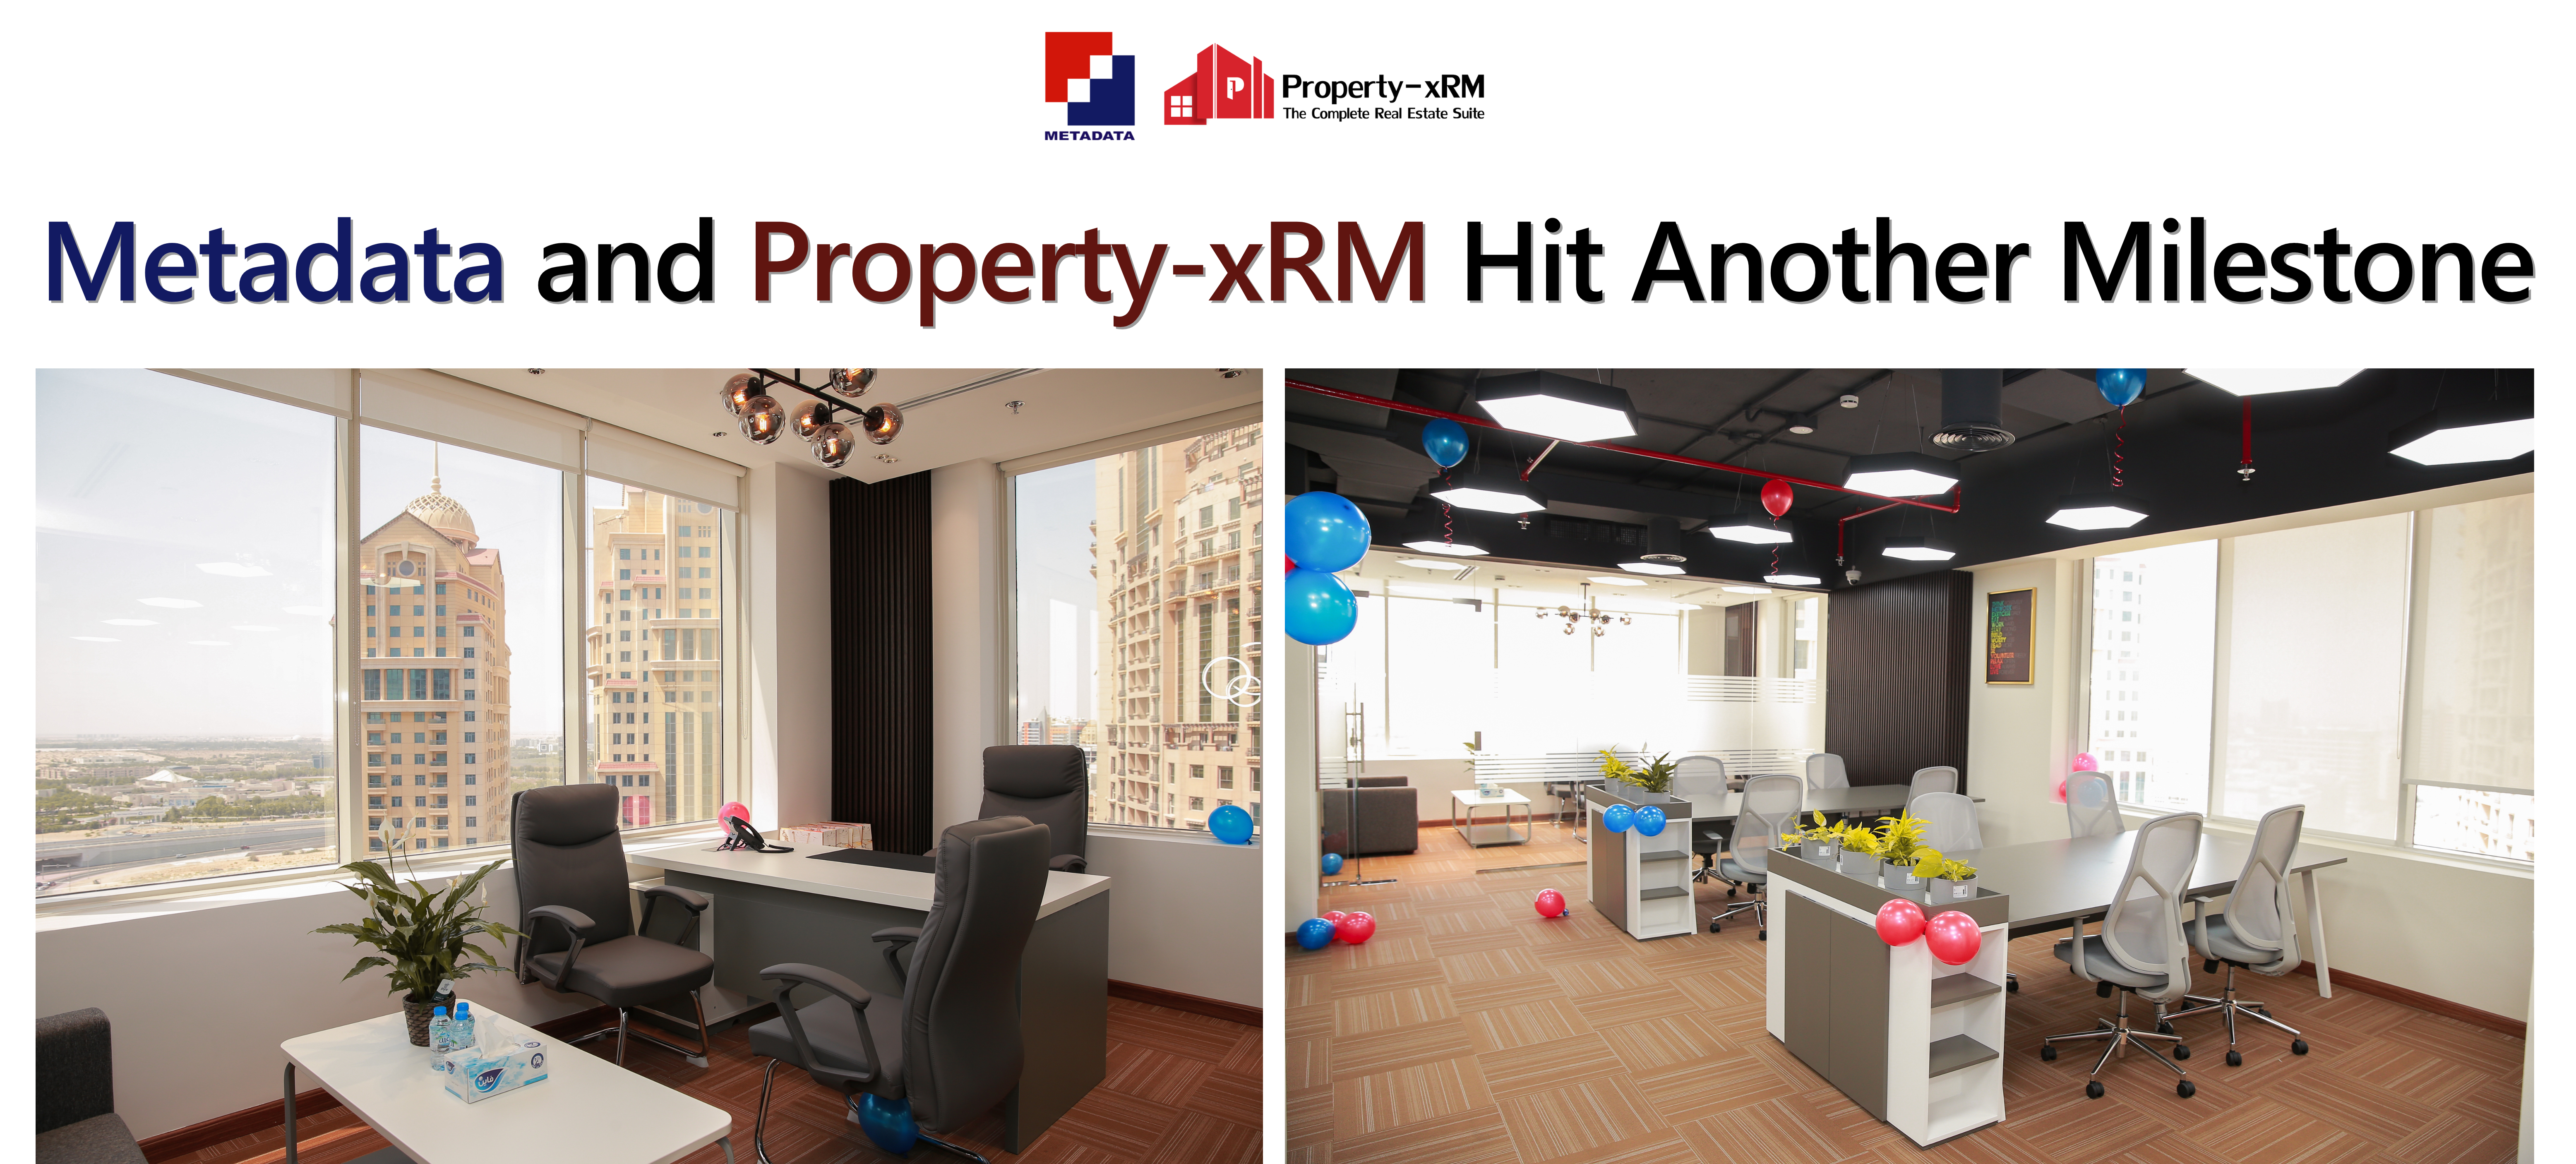 Metadata and Property-xRM hit another milestone